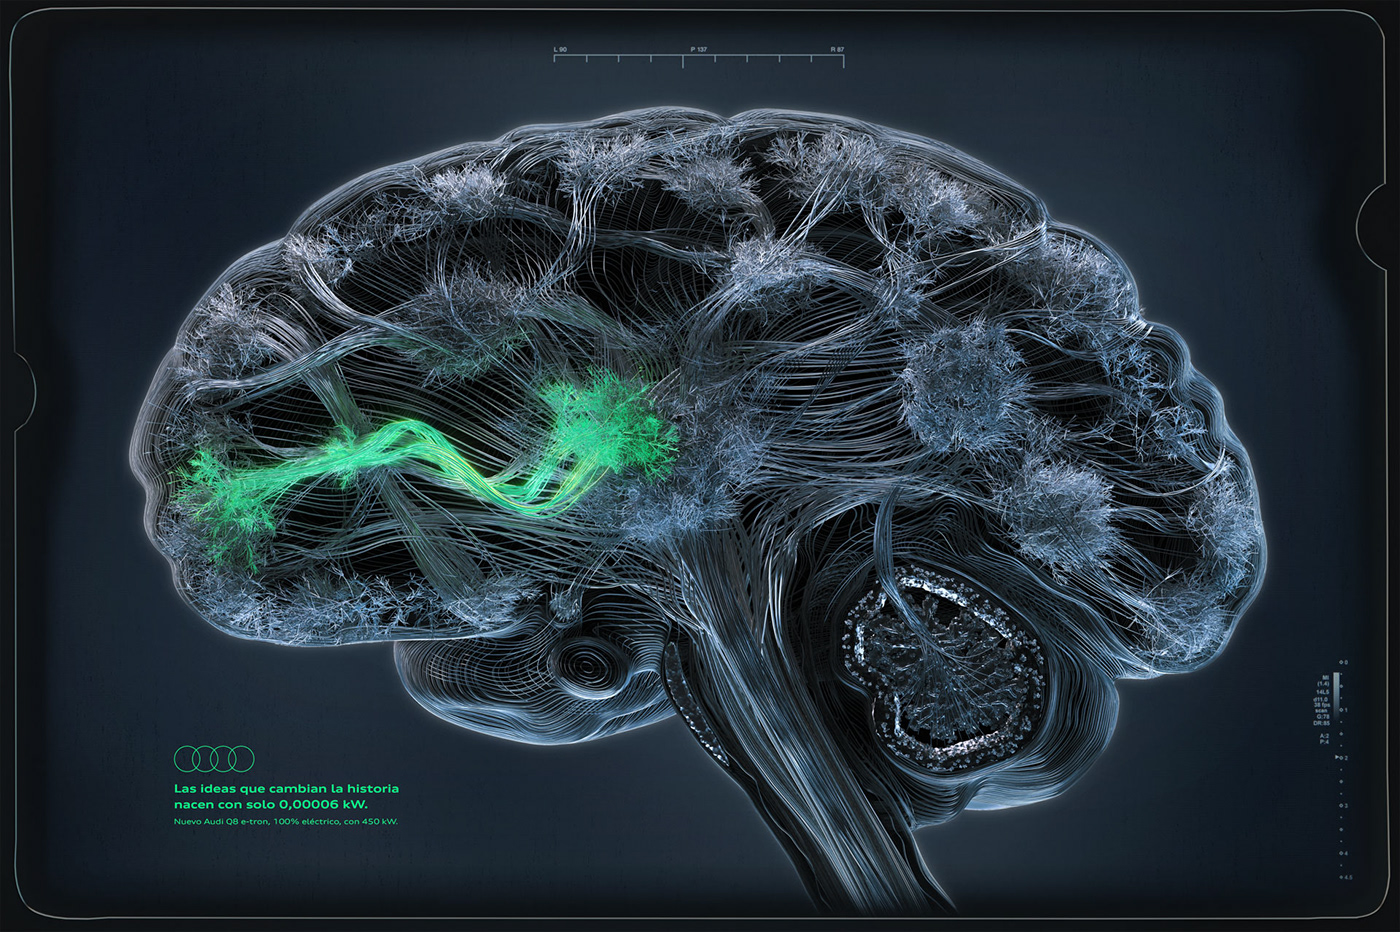 print editorial 3D c4d brain synapse Audi